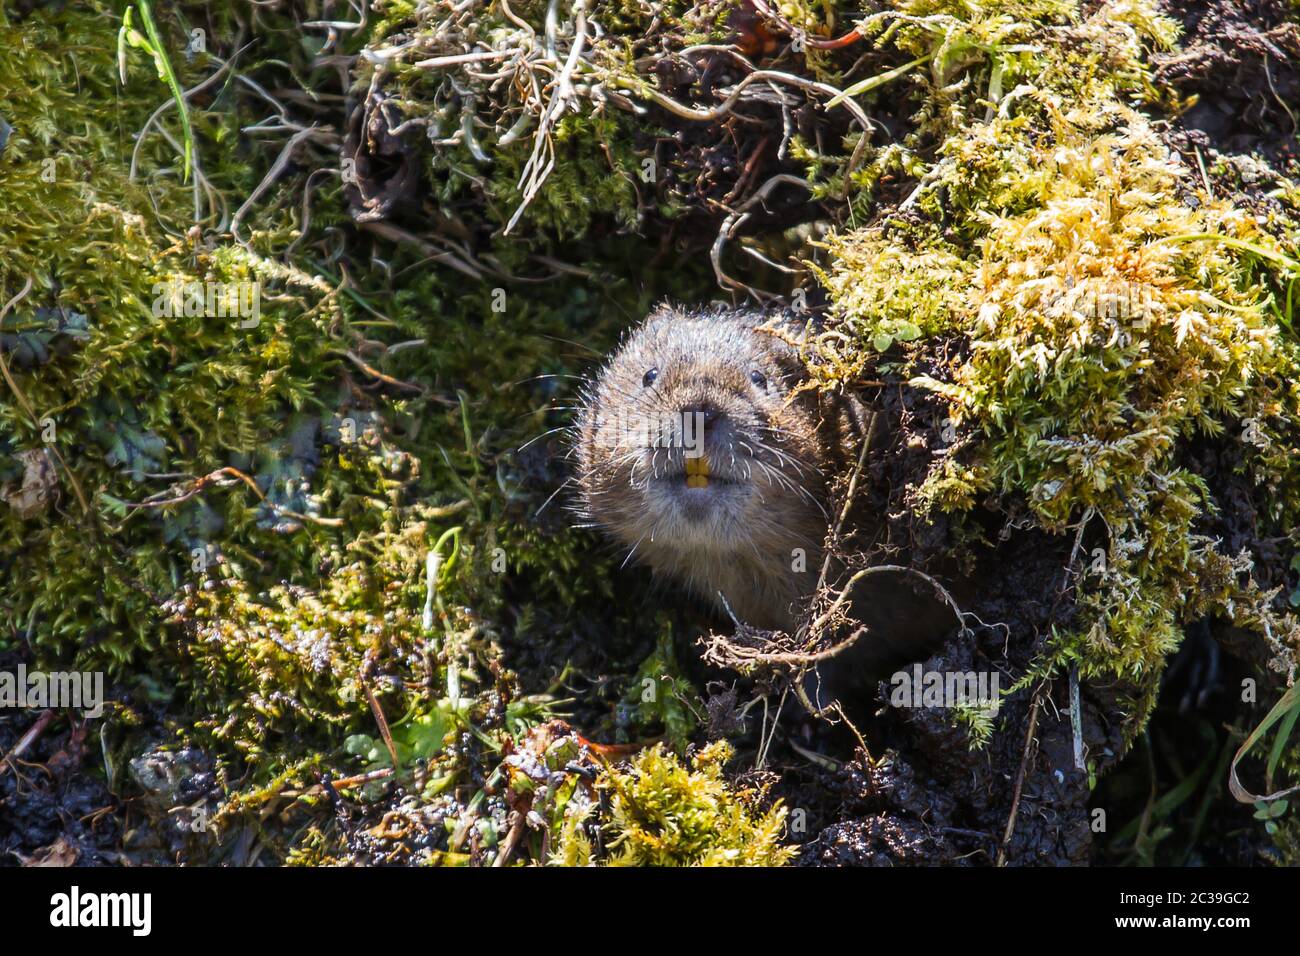 Closeup photo of a Water vole Stock Photo